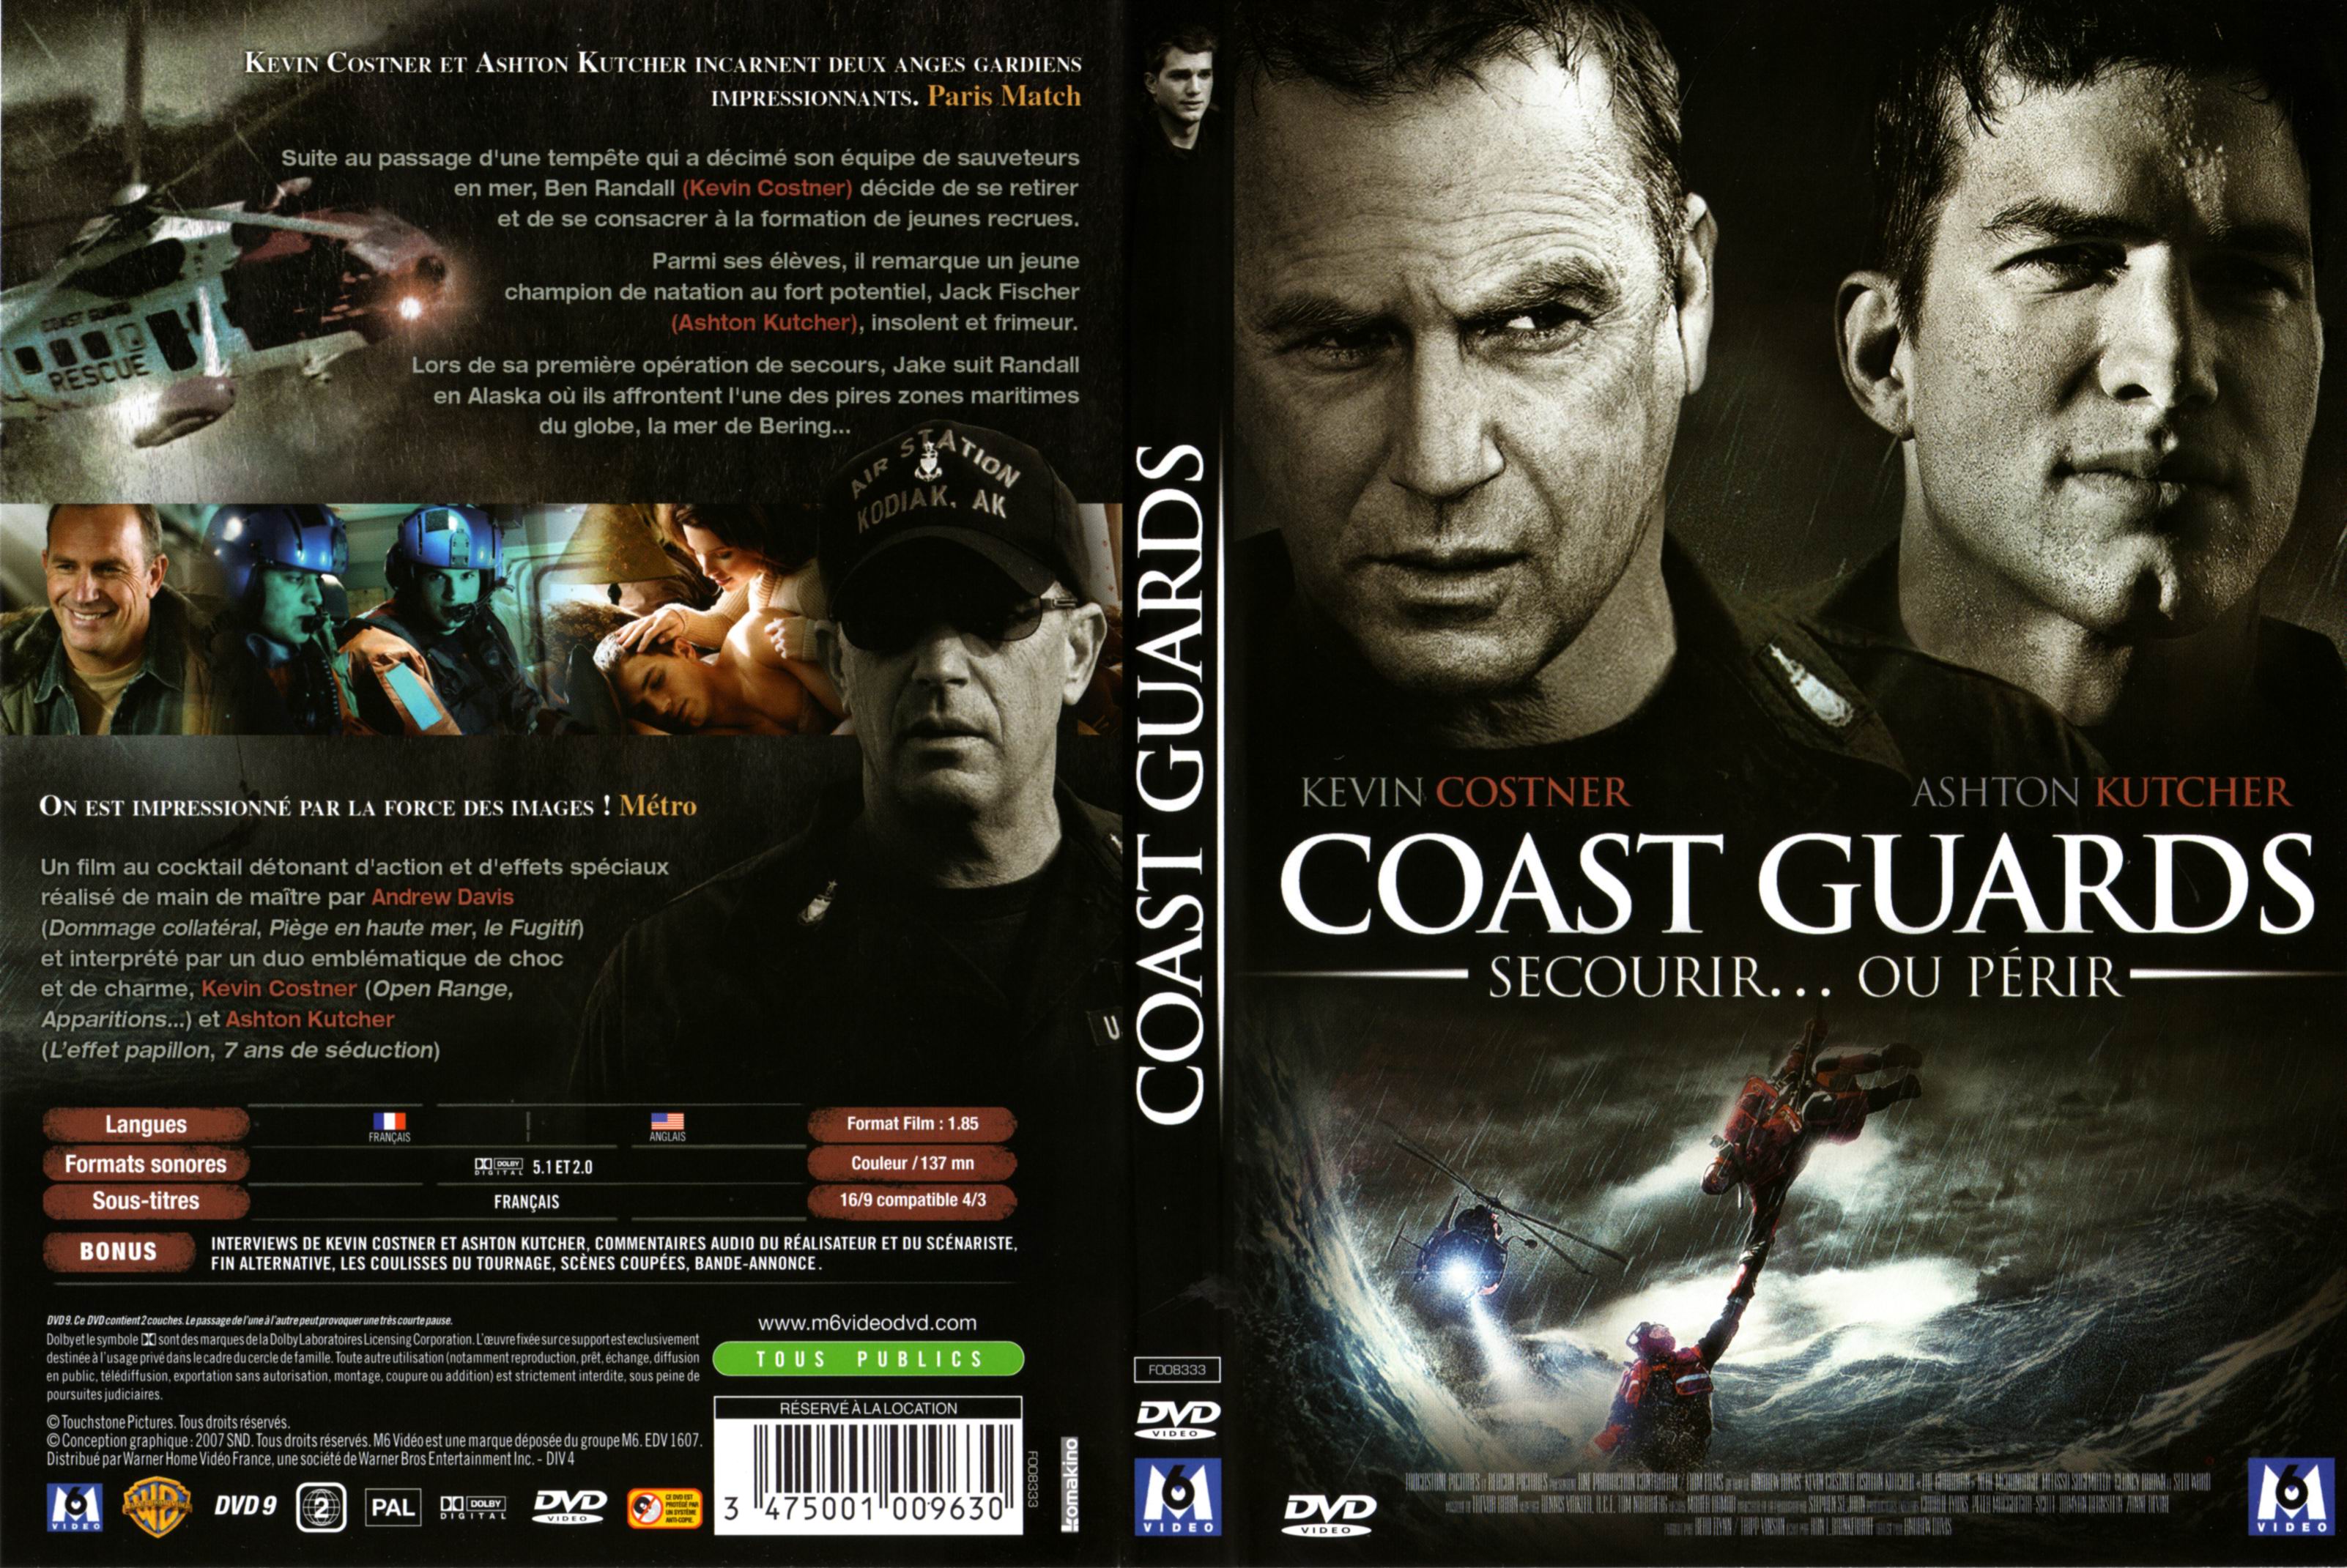 Jaquette DVD Coast guards